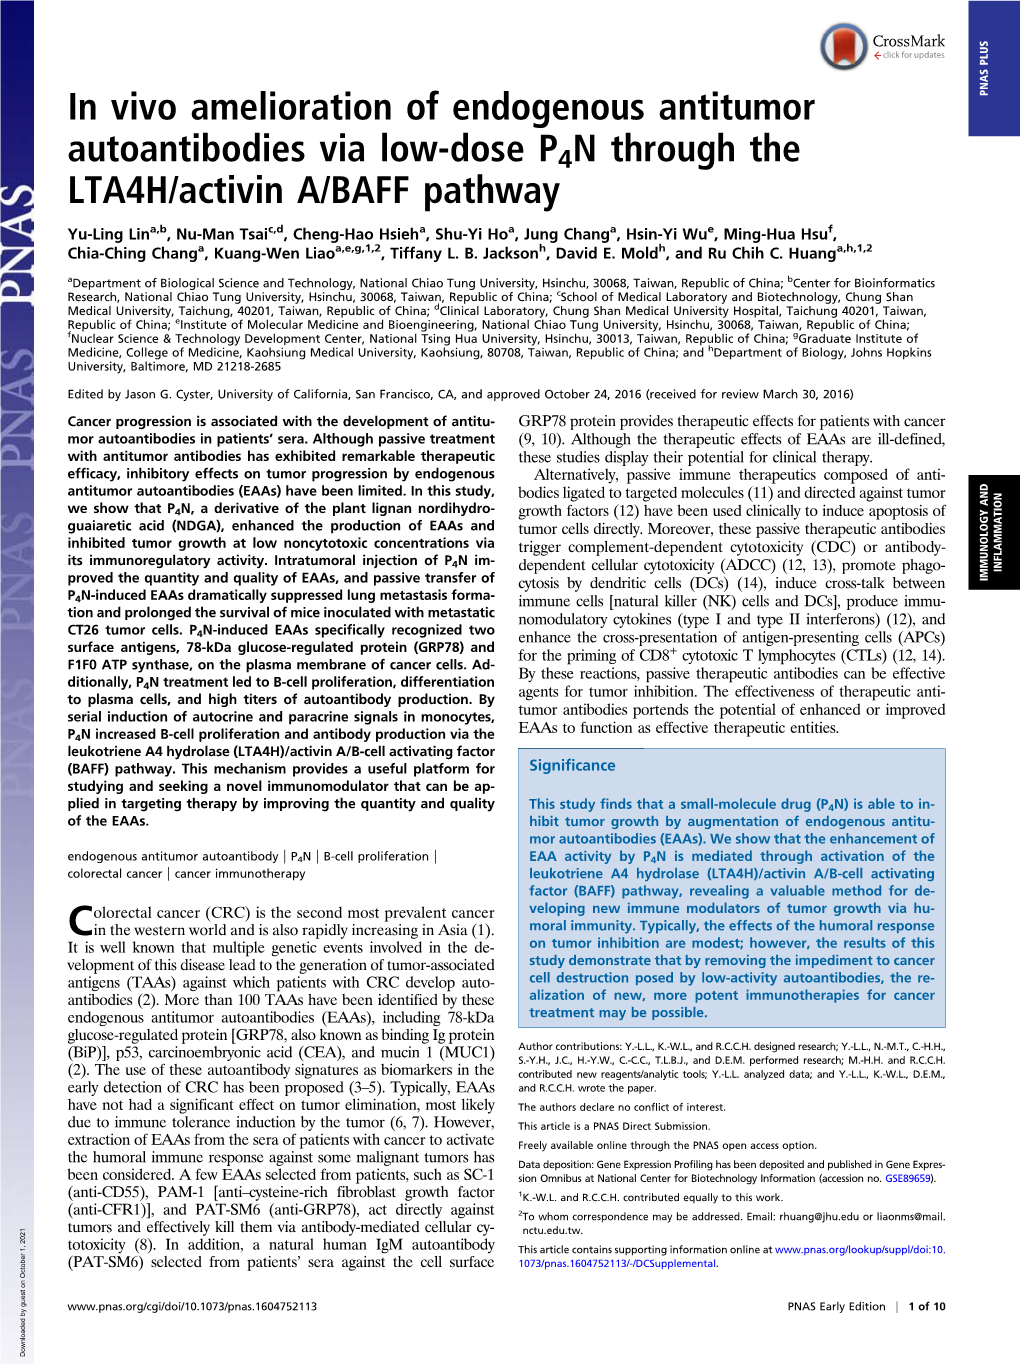 In Vivo Amelioration of Endogenous Antitumor Autoantibodies Via Low